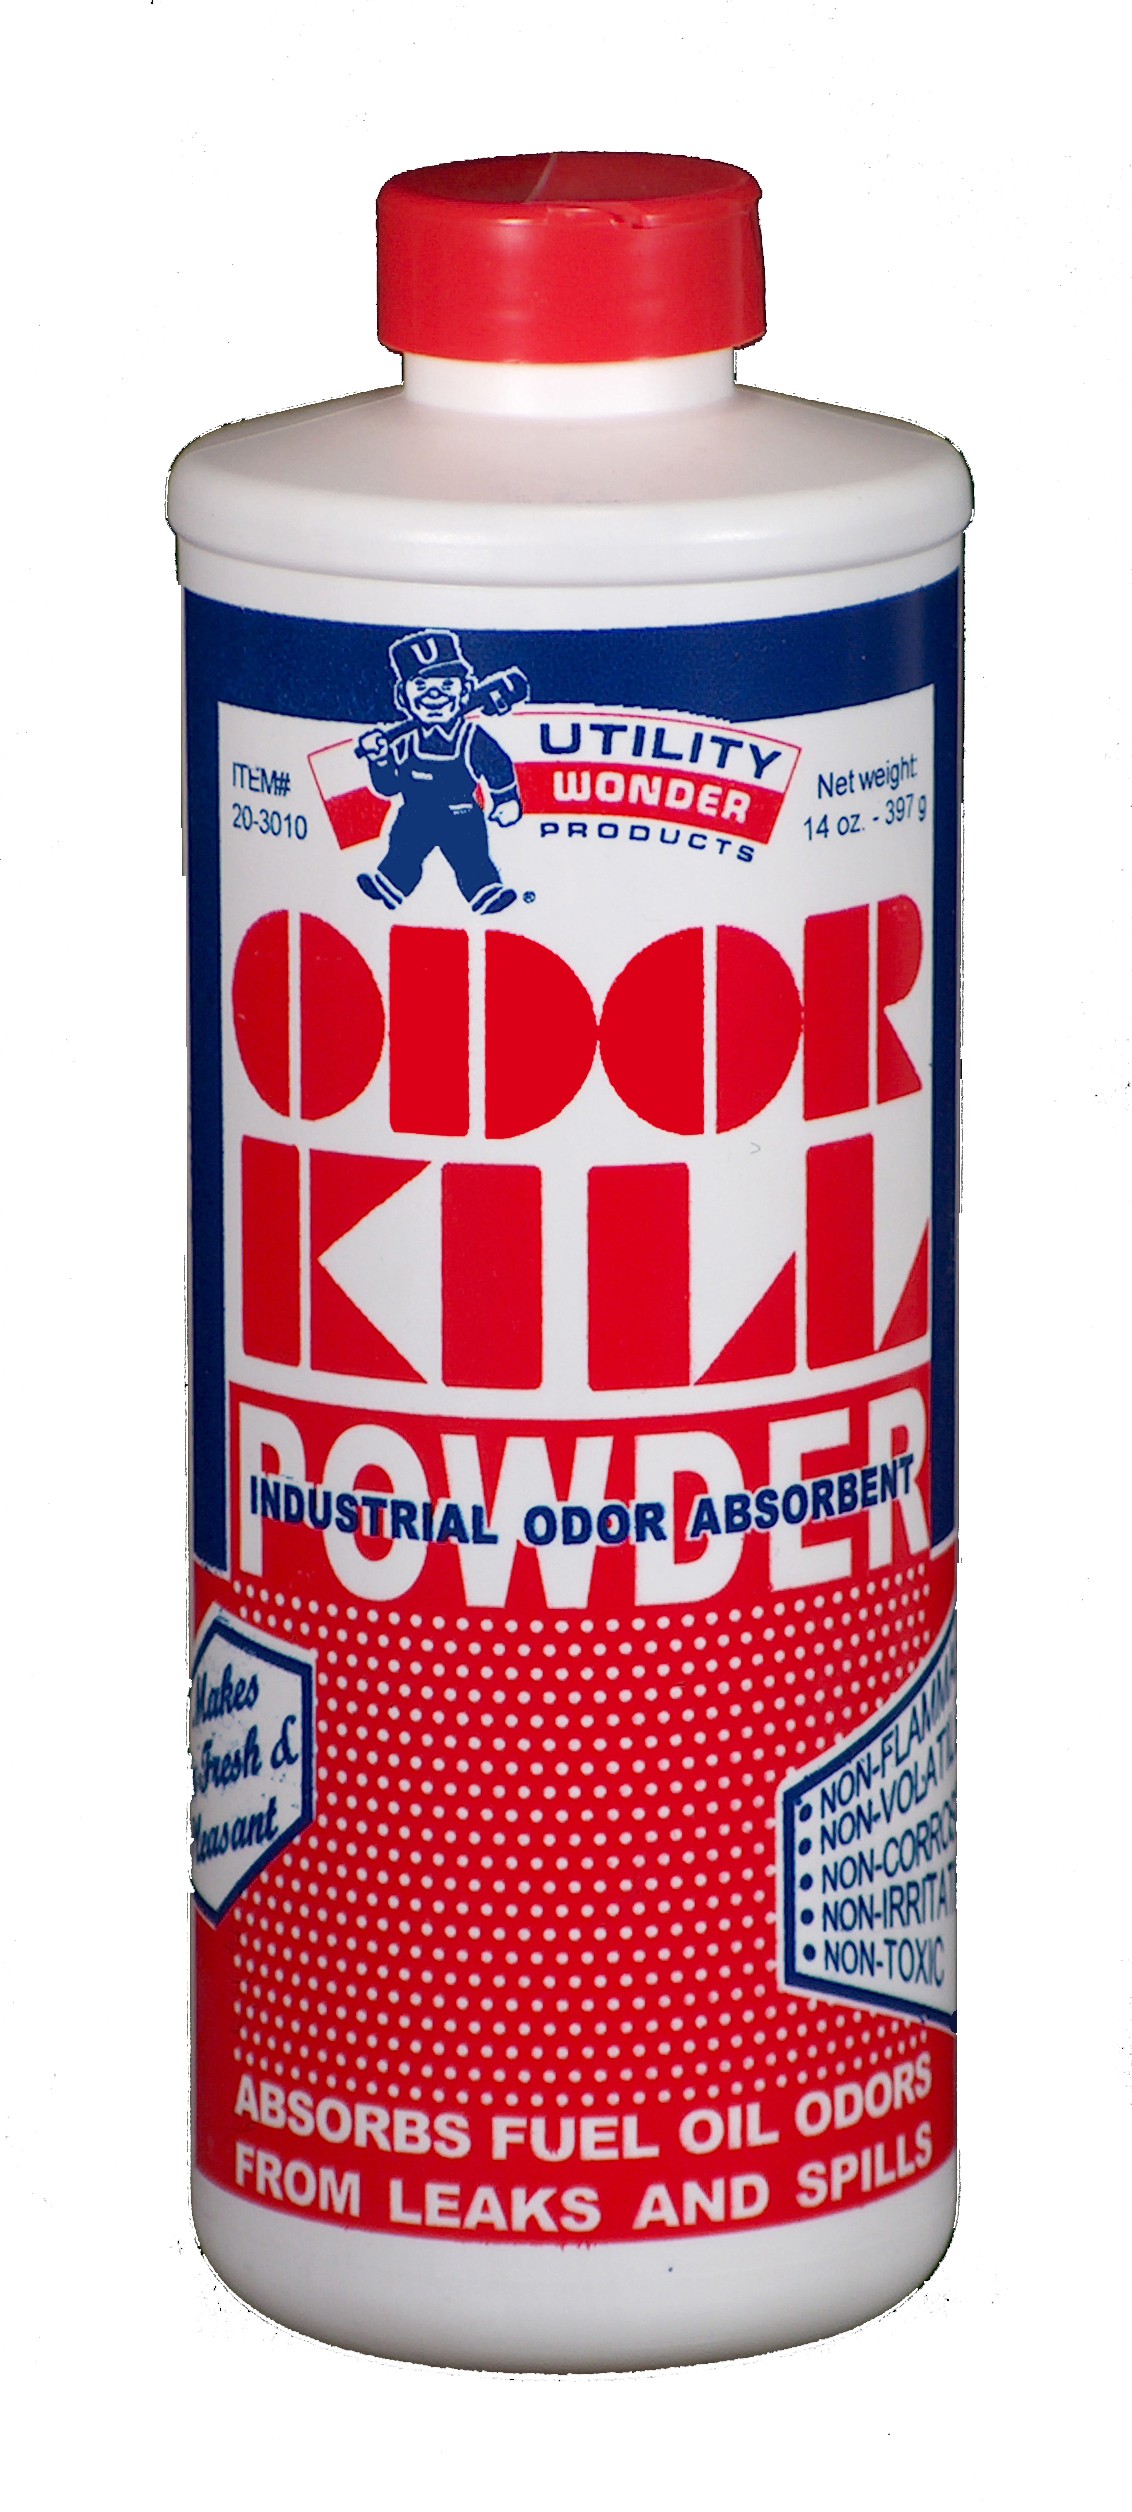 ODOR-KILL POWDER FUEL OIL DEODORIZER